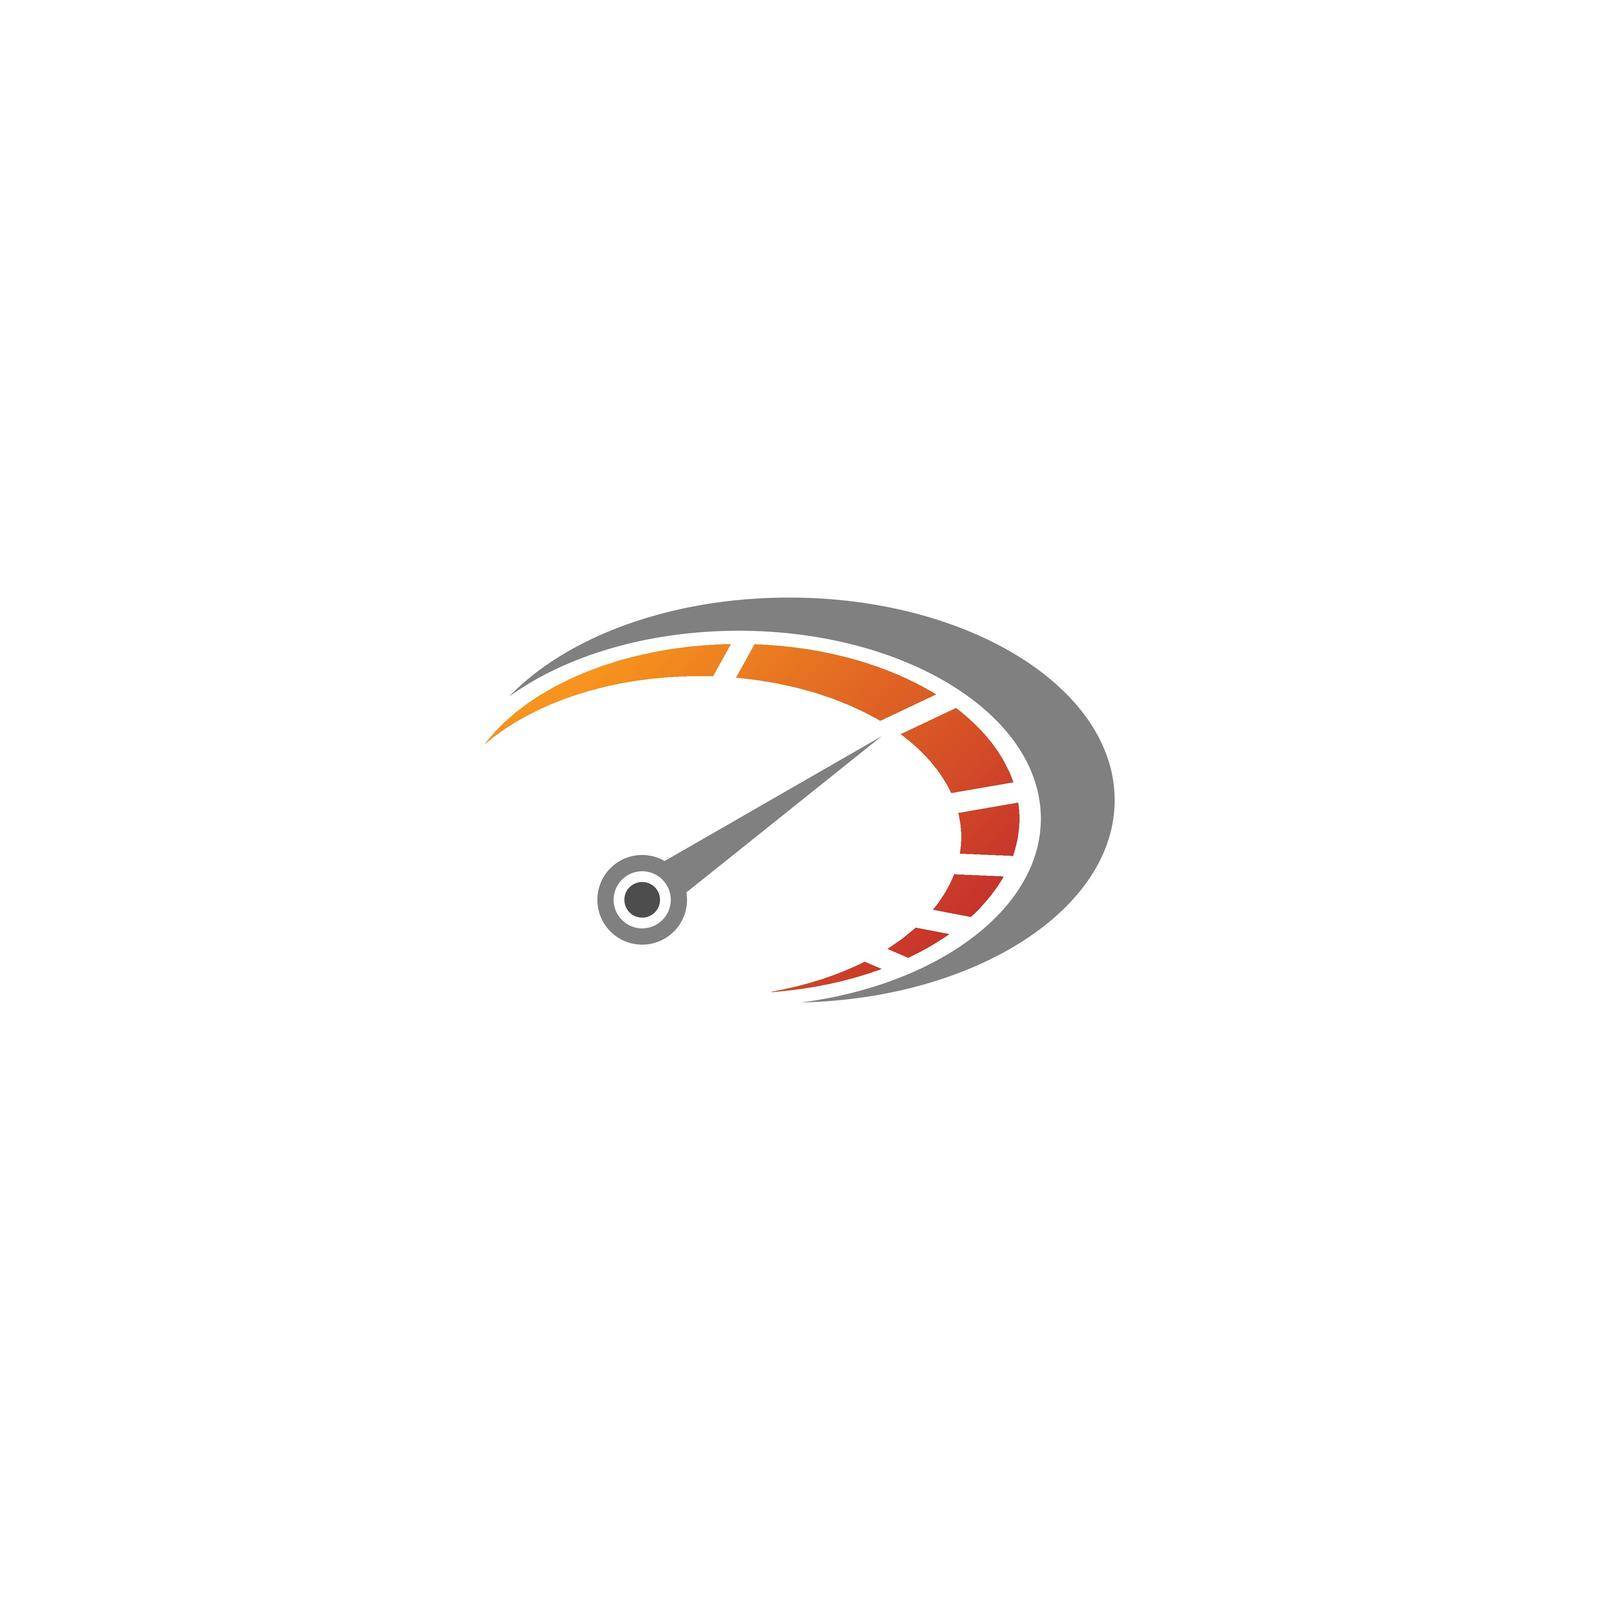 Speedometer icon. Gauge and rpm meter logo. Vector illustration